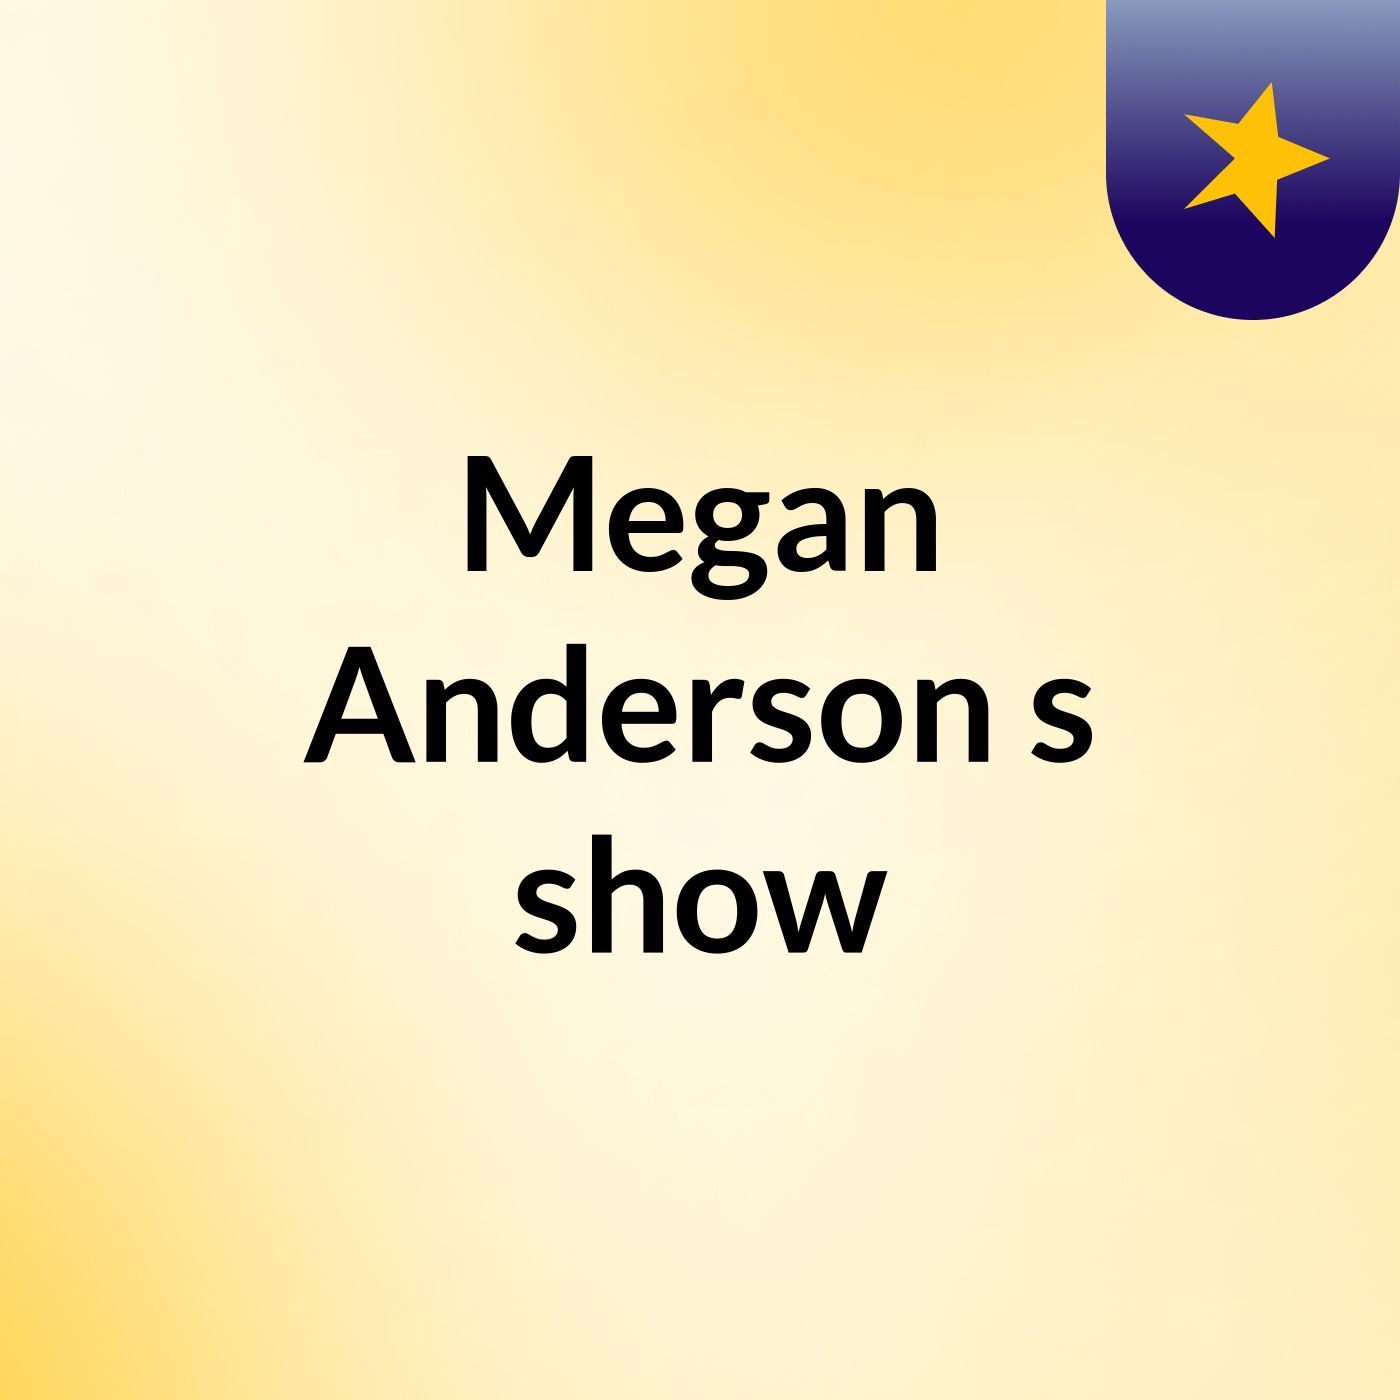 Megan Anderson's show